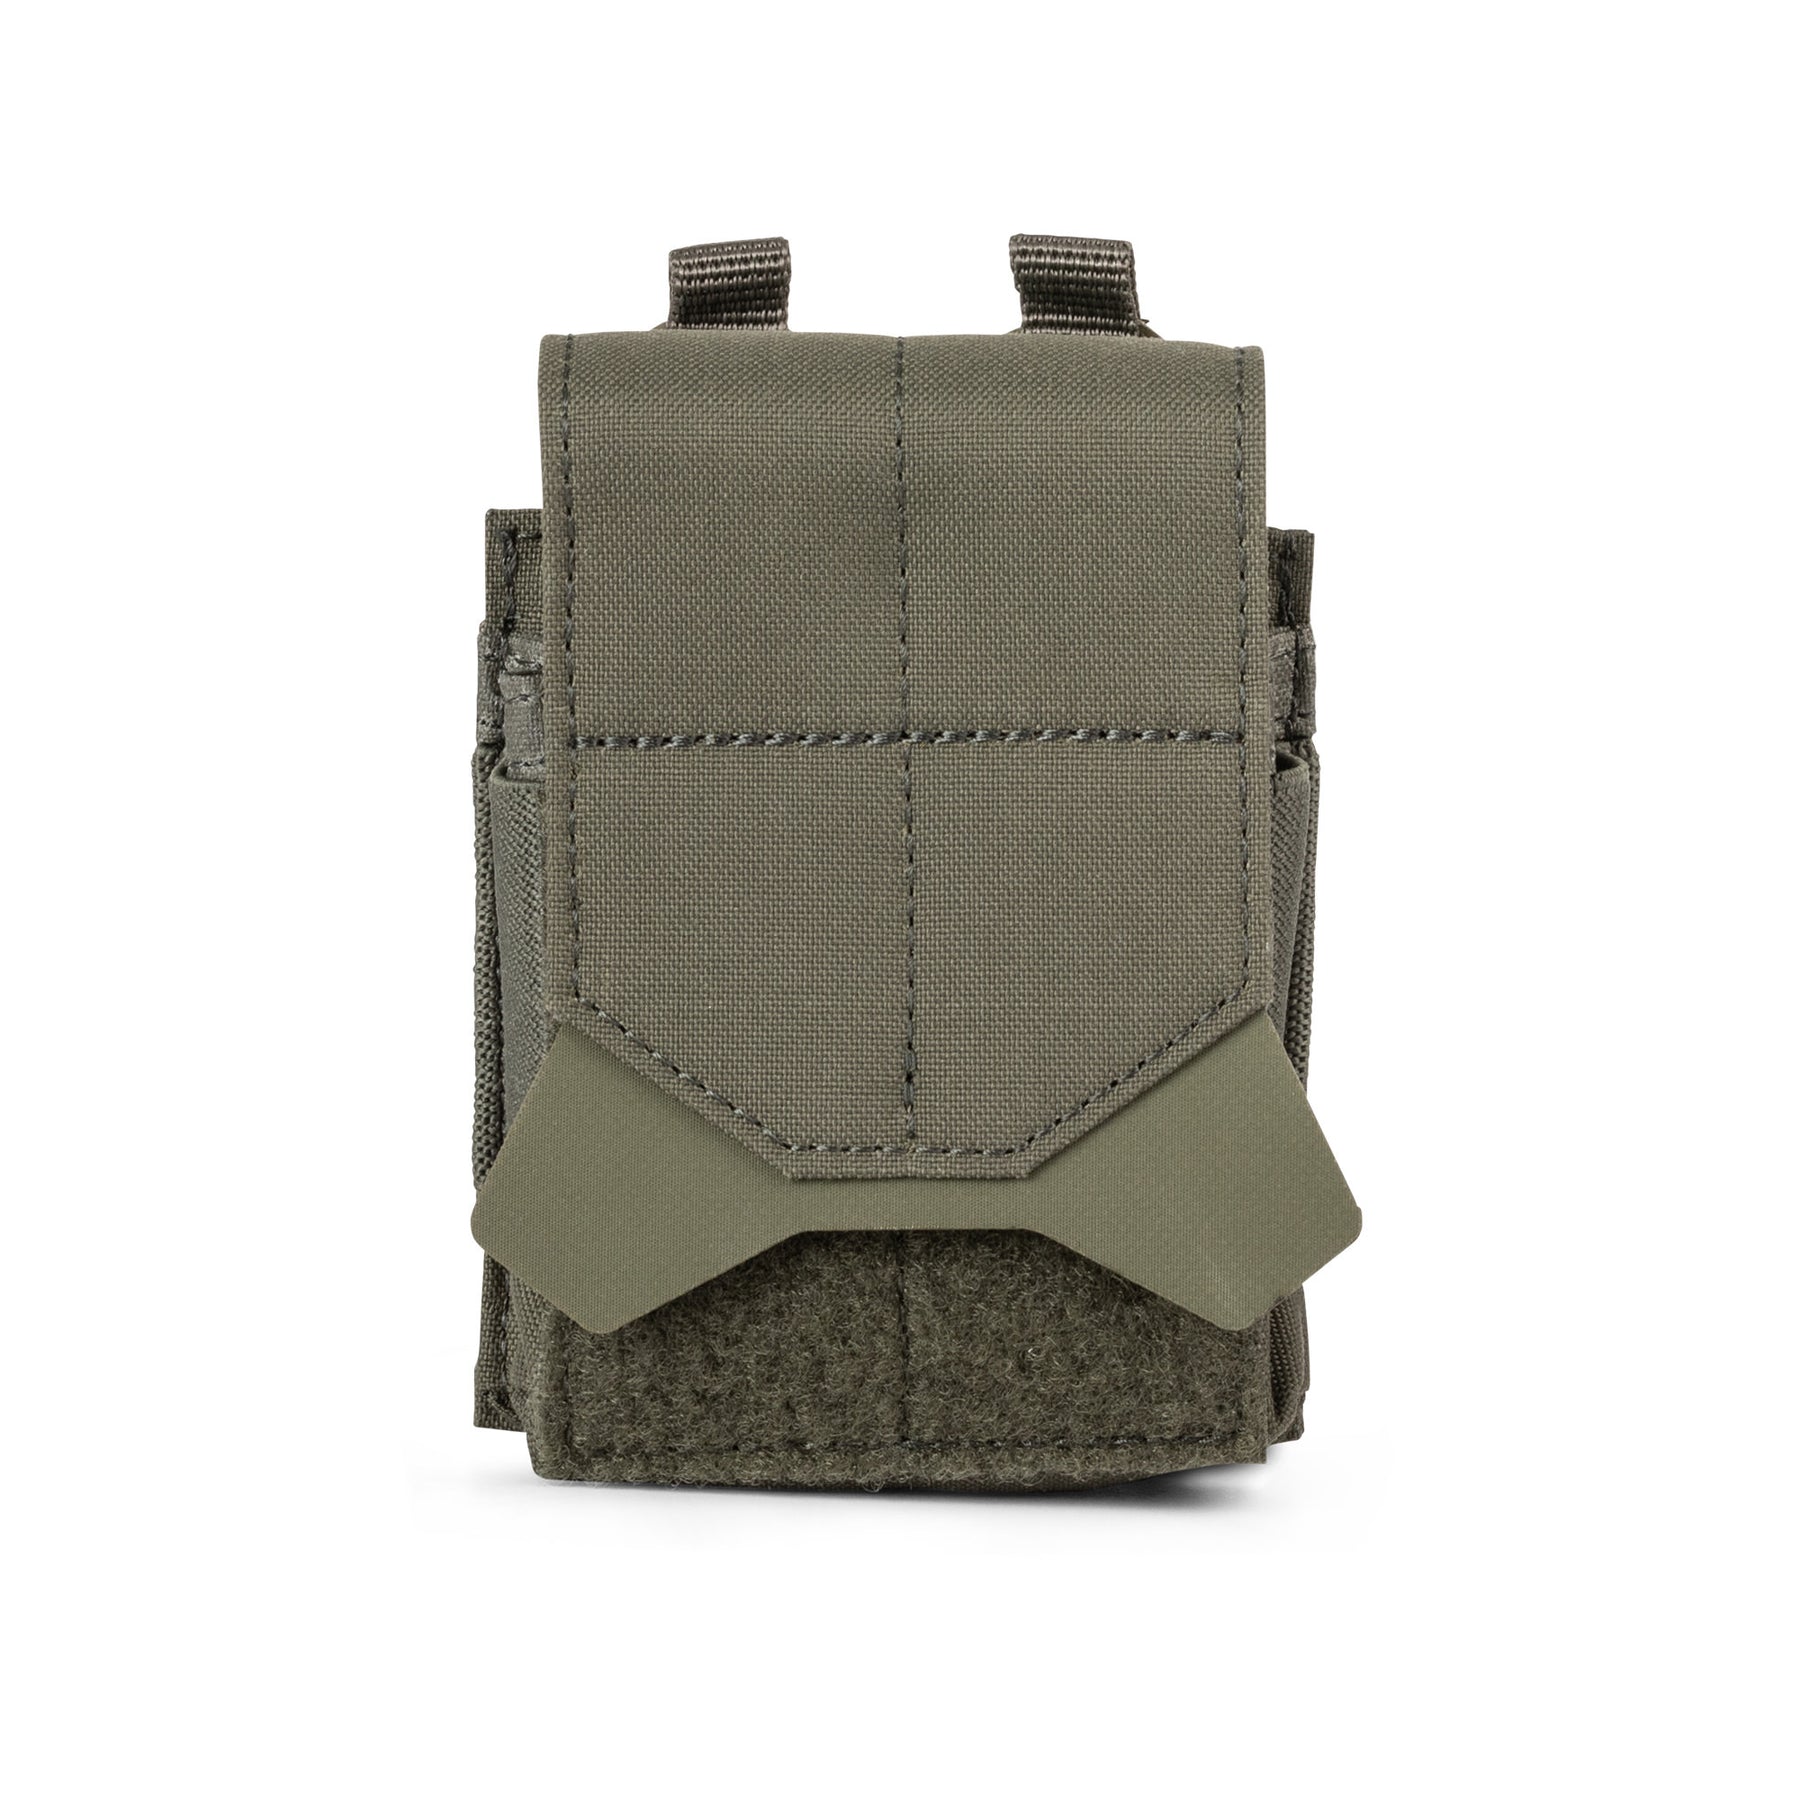 flex cuff pouch di 5.11 - tasca per manette ranger green - vista frontale